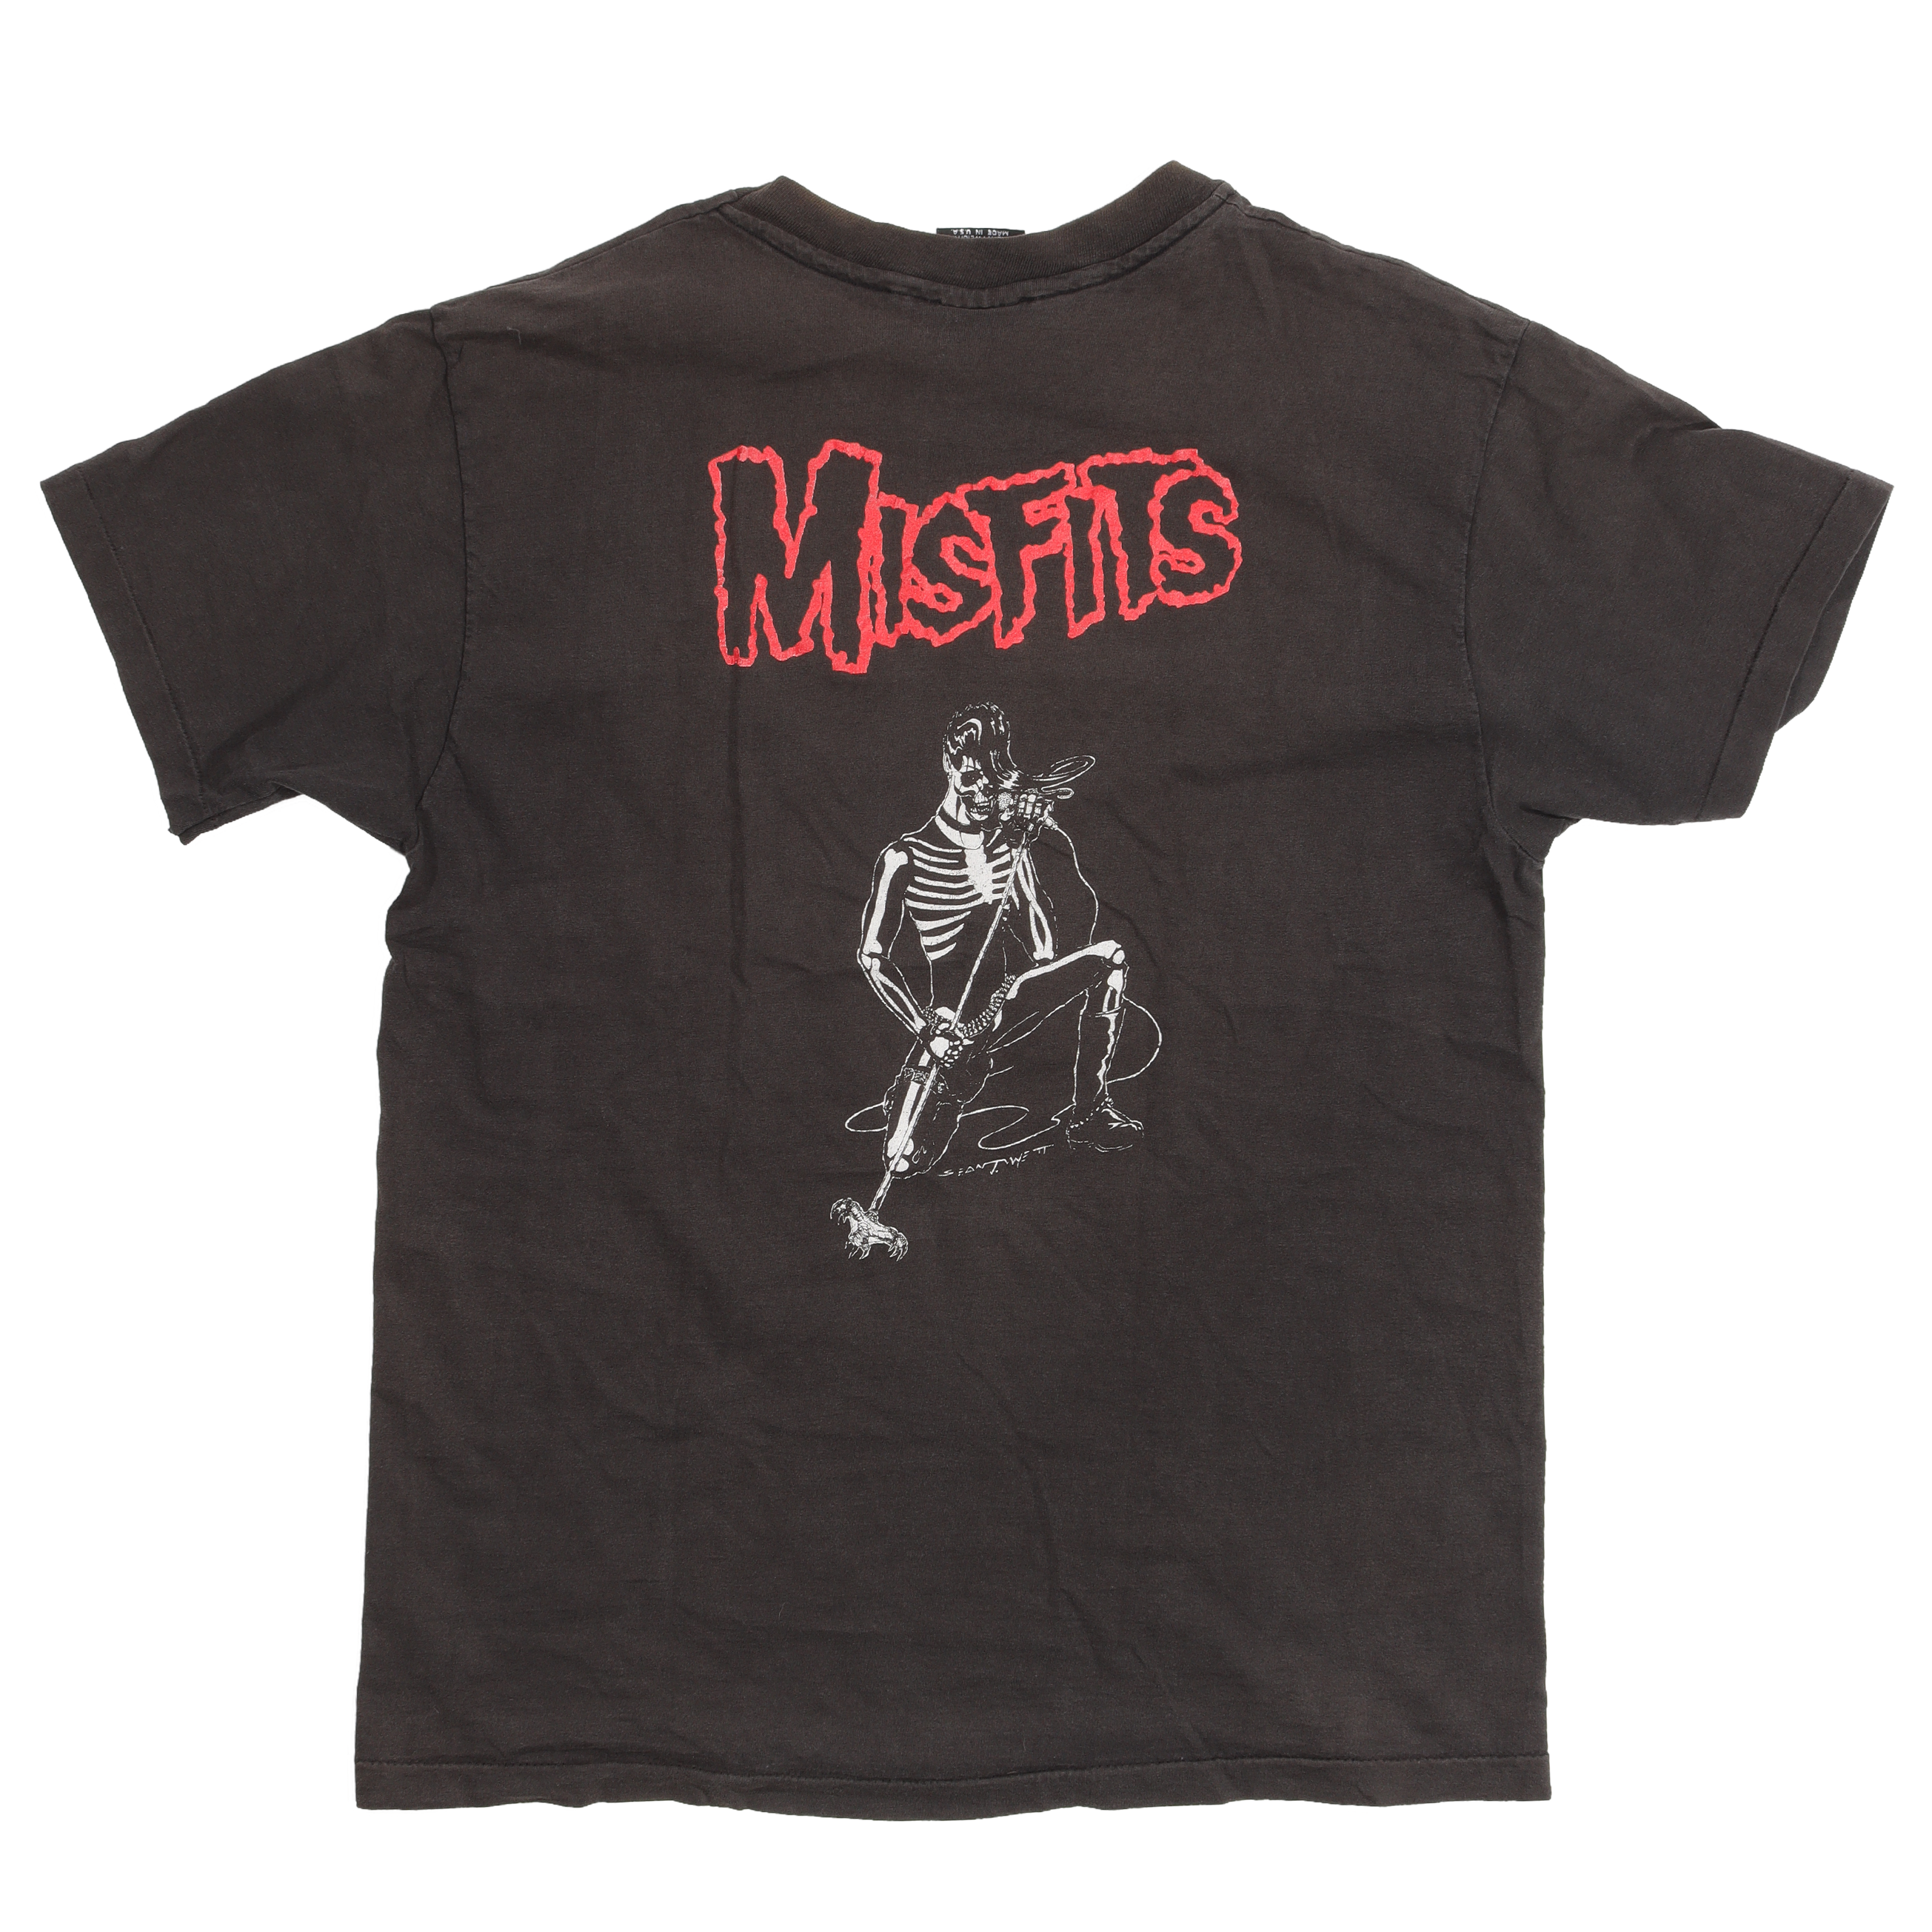 Misfits 'Legacy of Brutality' T-Shirt